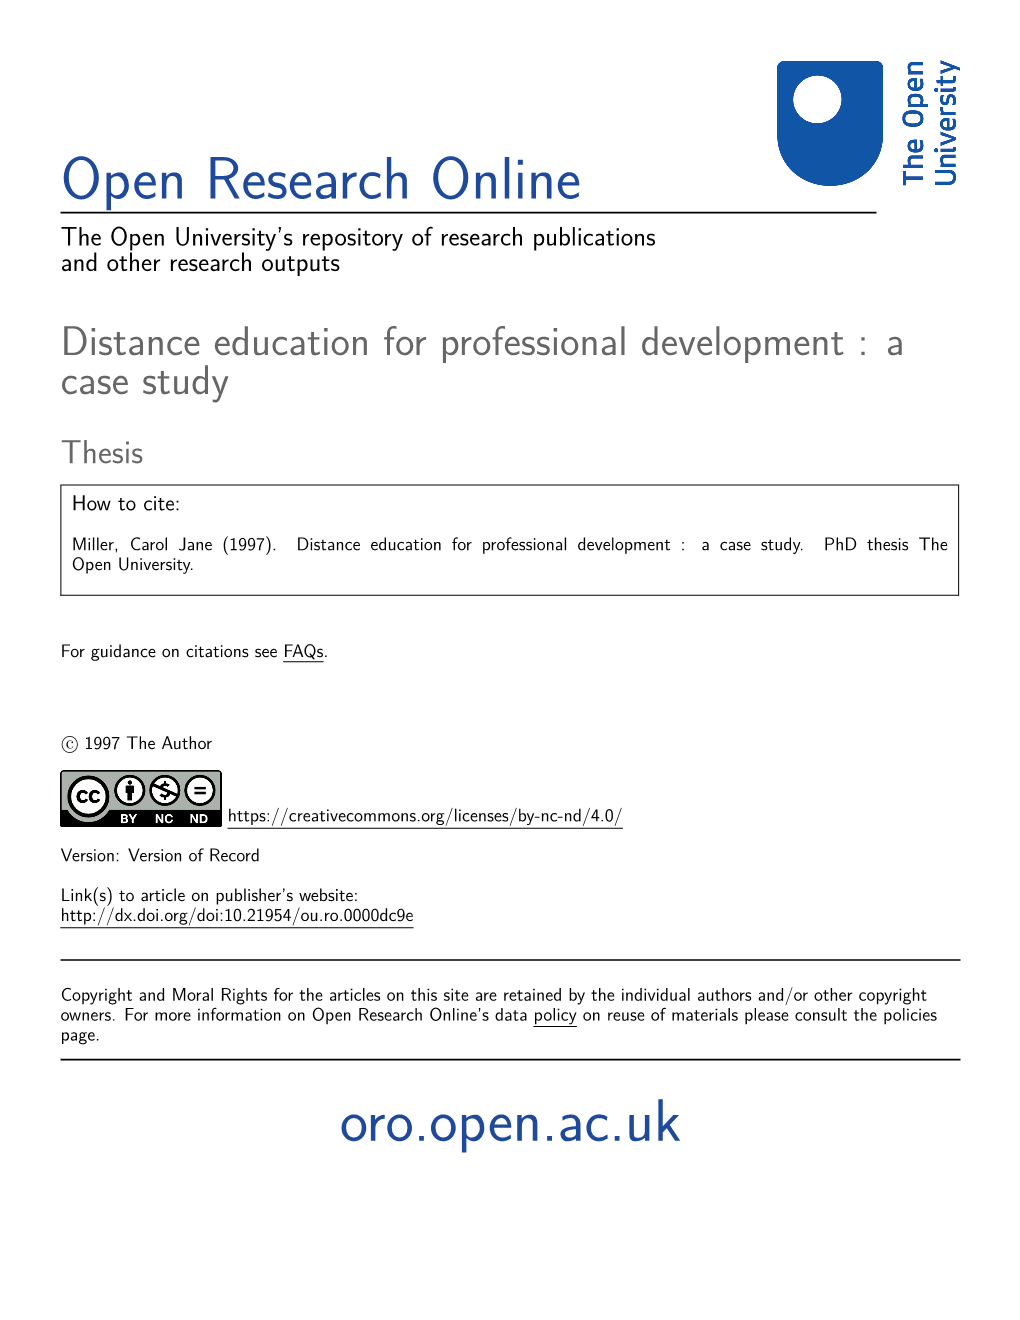 Distance Education for Professional Development : a Case Study